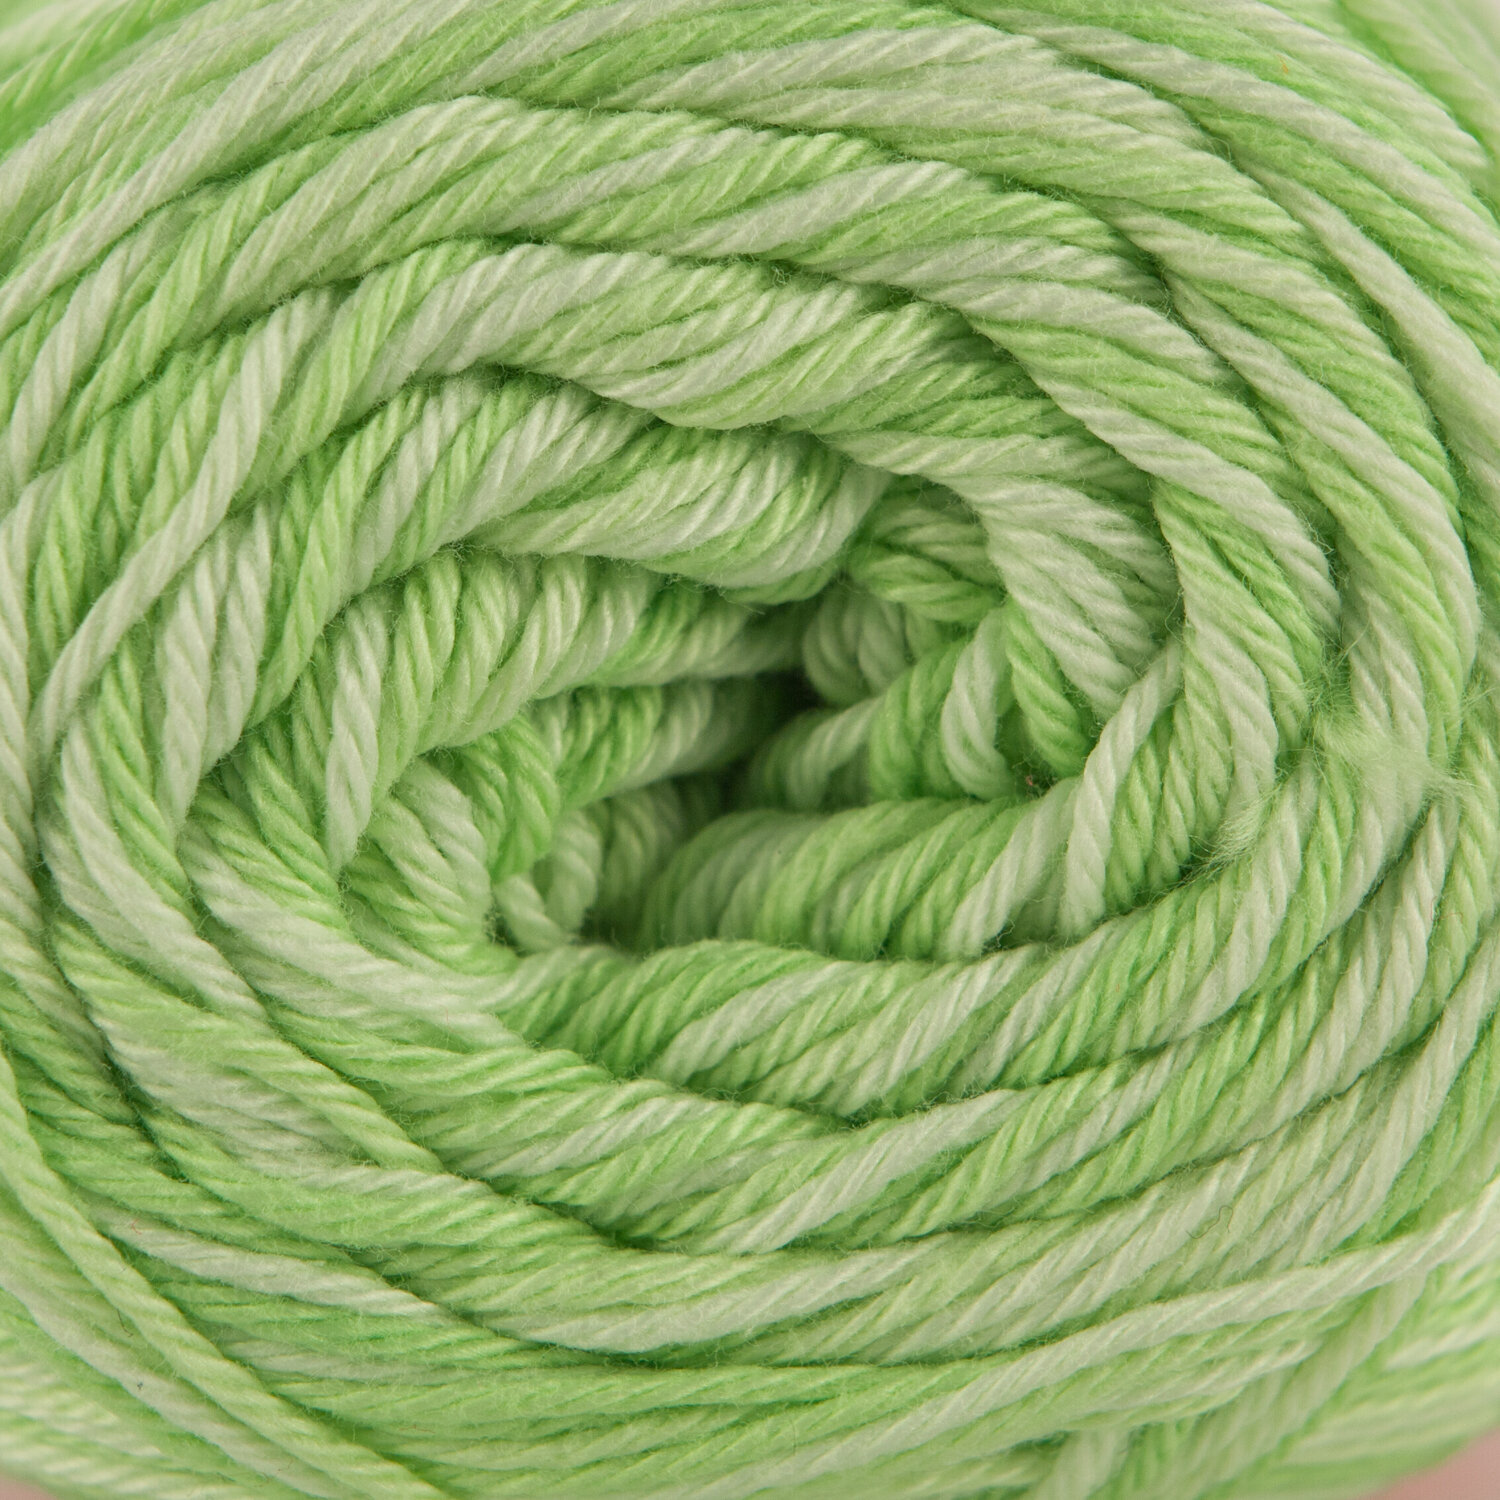 Knitting Yarn Nitarna Ceska Trebova Katka Ombre 61032 Green